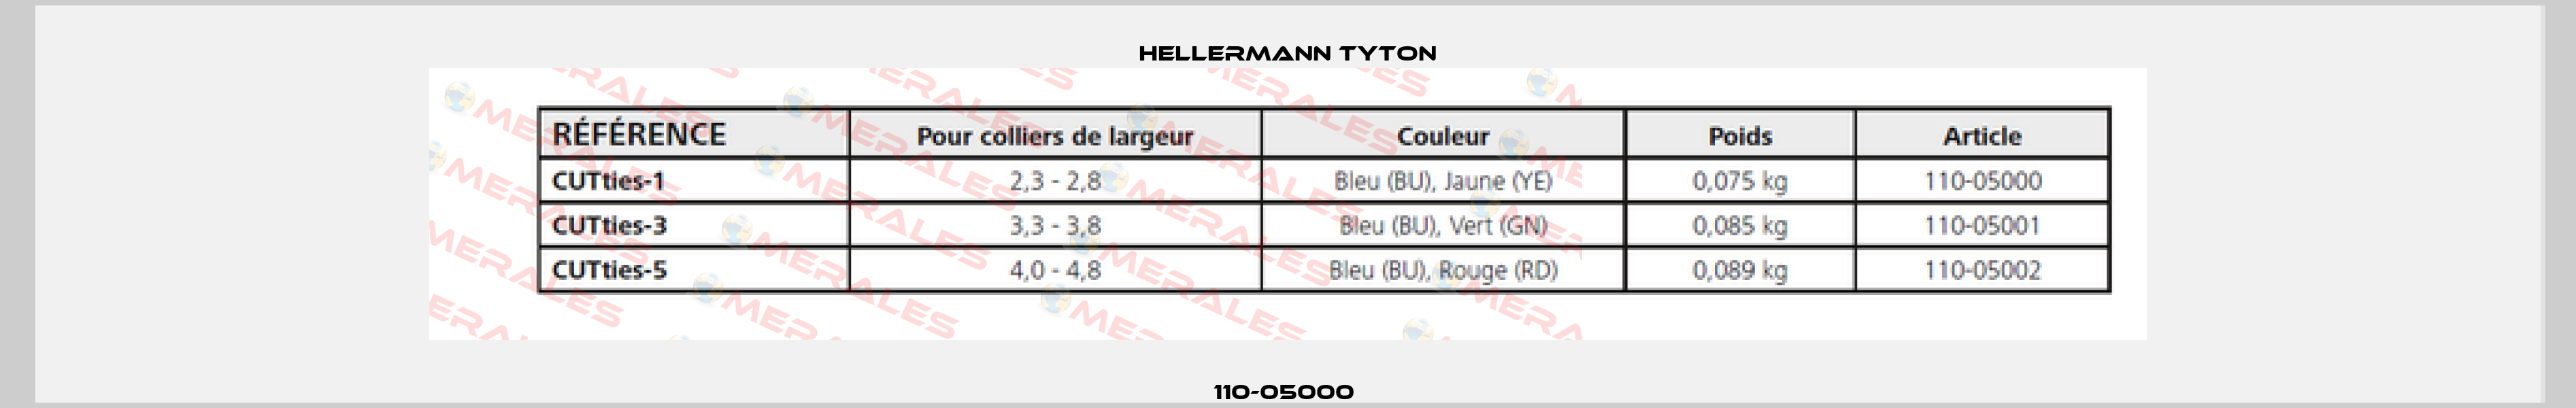 110-05000  Hellermann Tyton